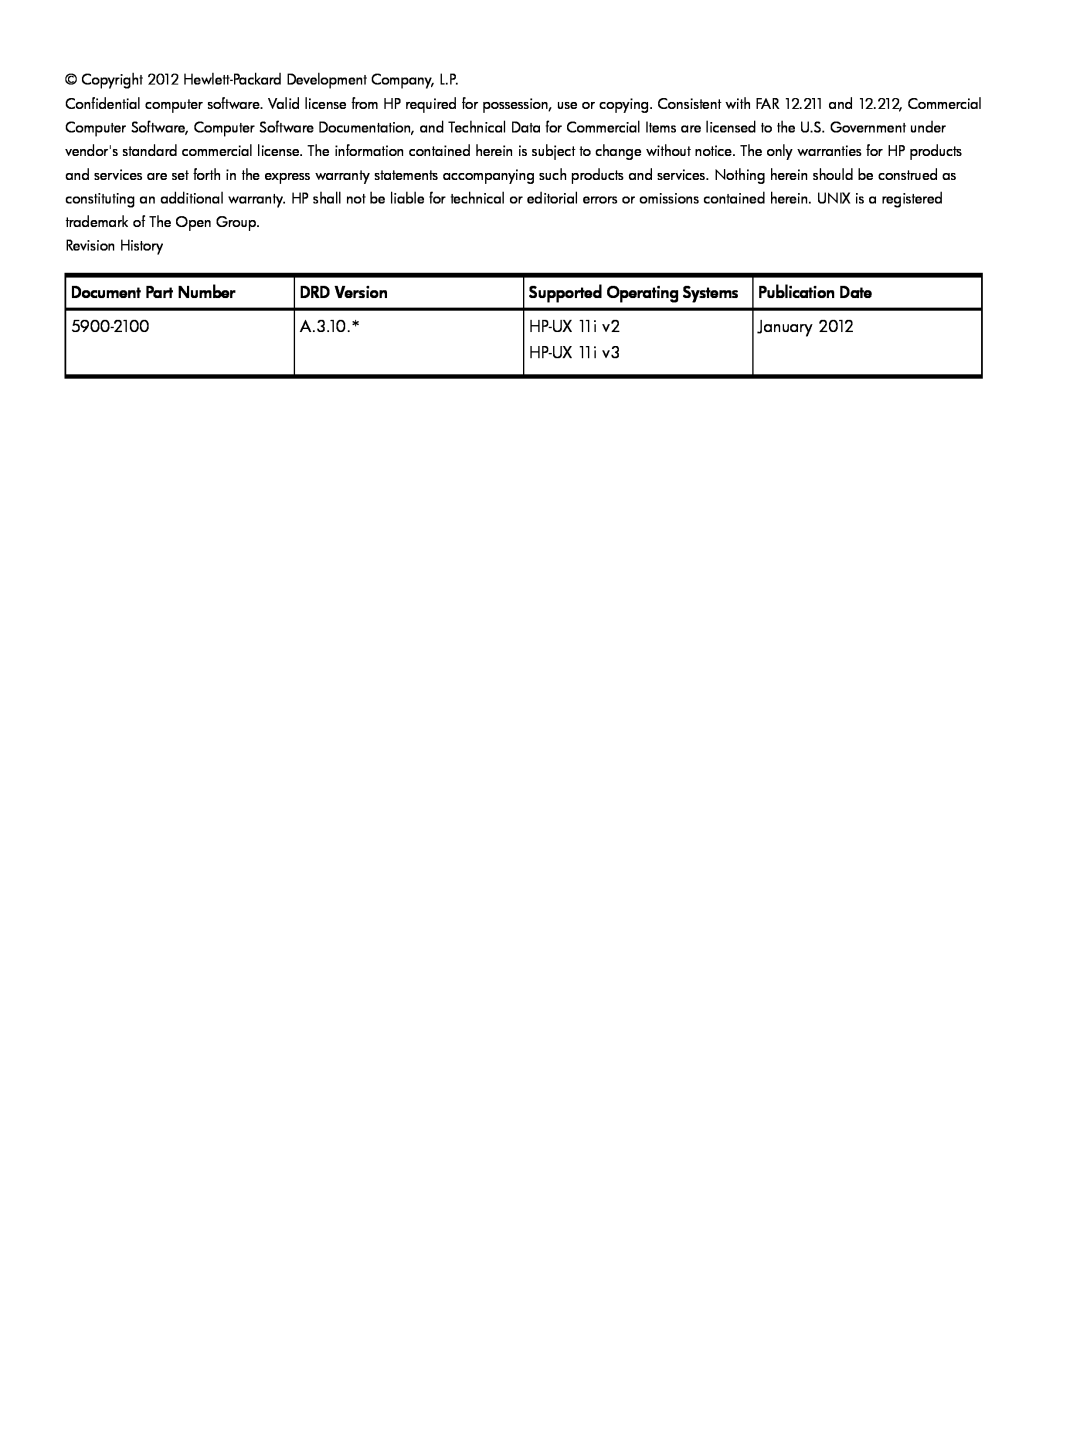 HP Dynamic Root Disk (DRD) manual Copyright 2012 Hewlett-Packard Development Company, L.P 